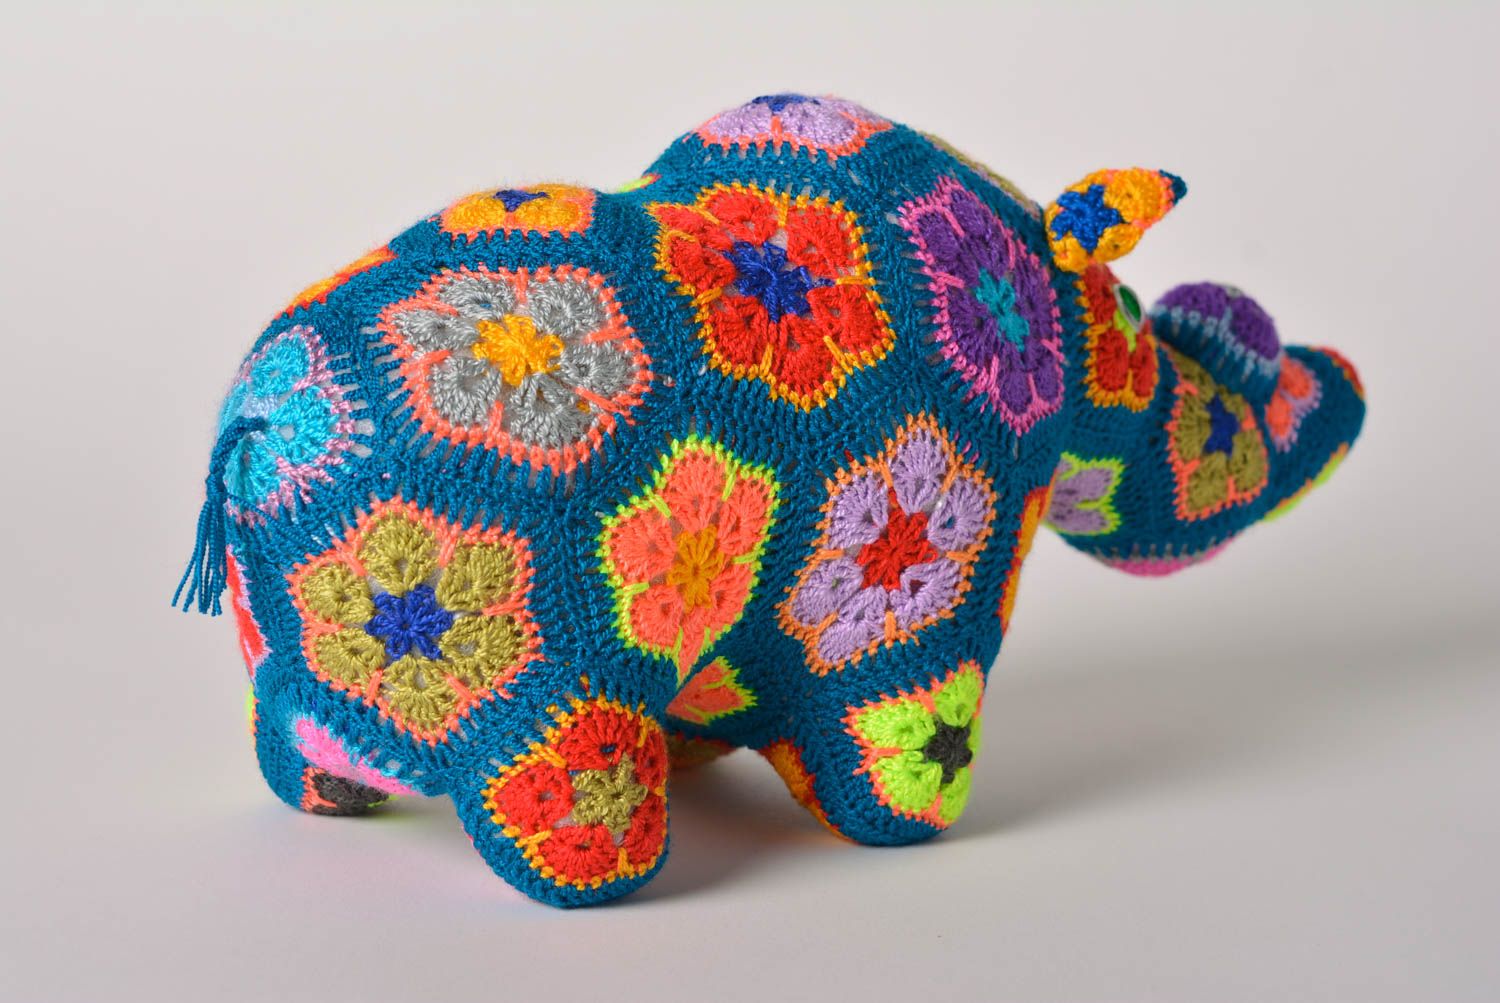 Beautiful handmade crochet toy stuffed toy soft toy for kids nursery design photo 3